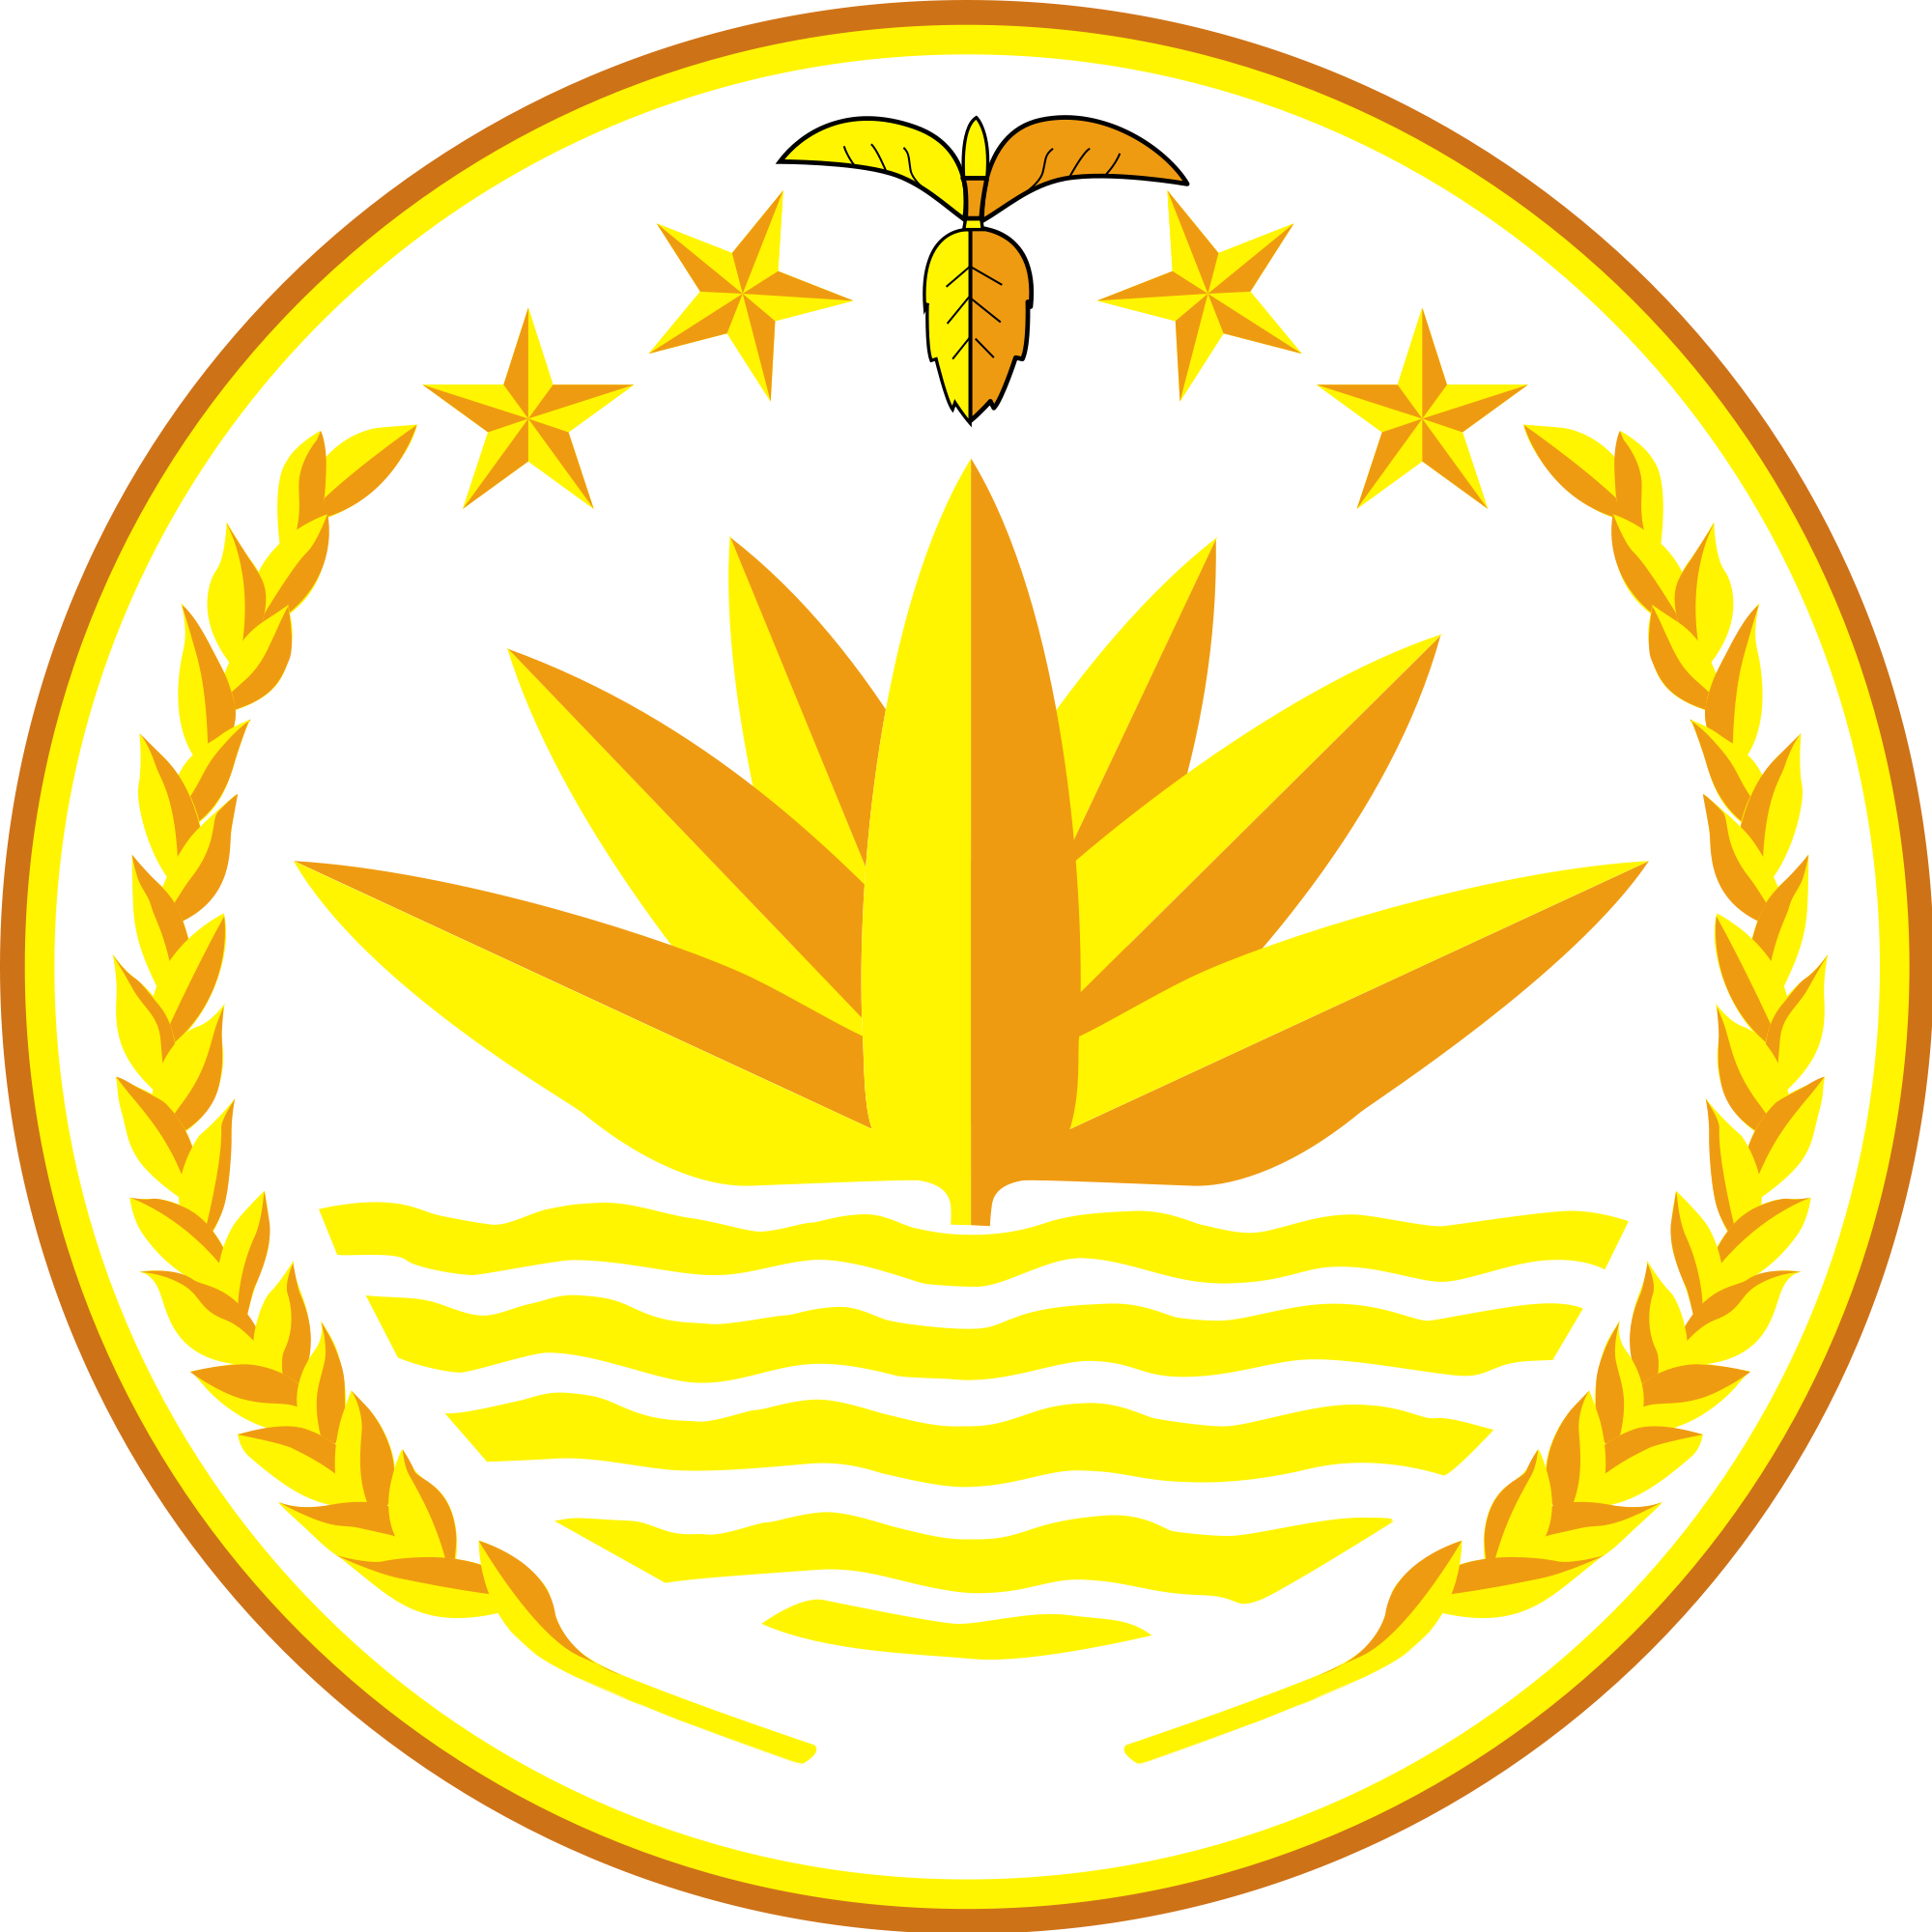 Emblem of Bangladesh